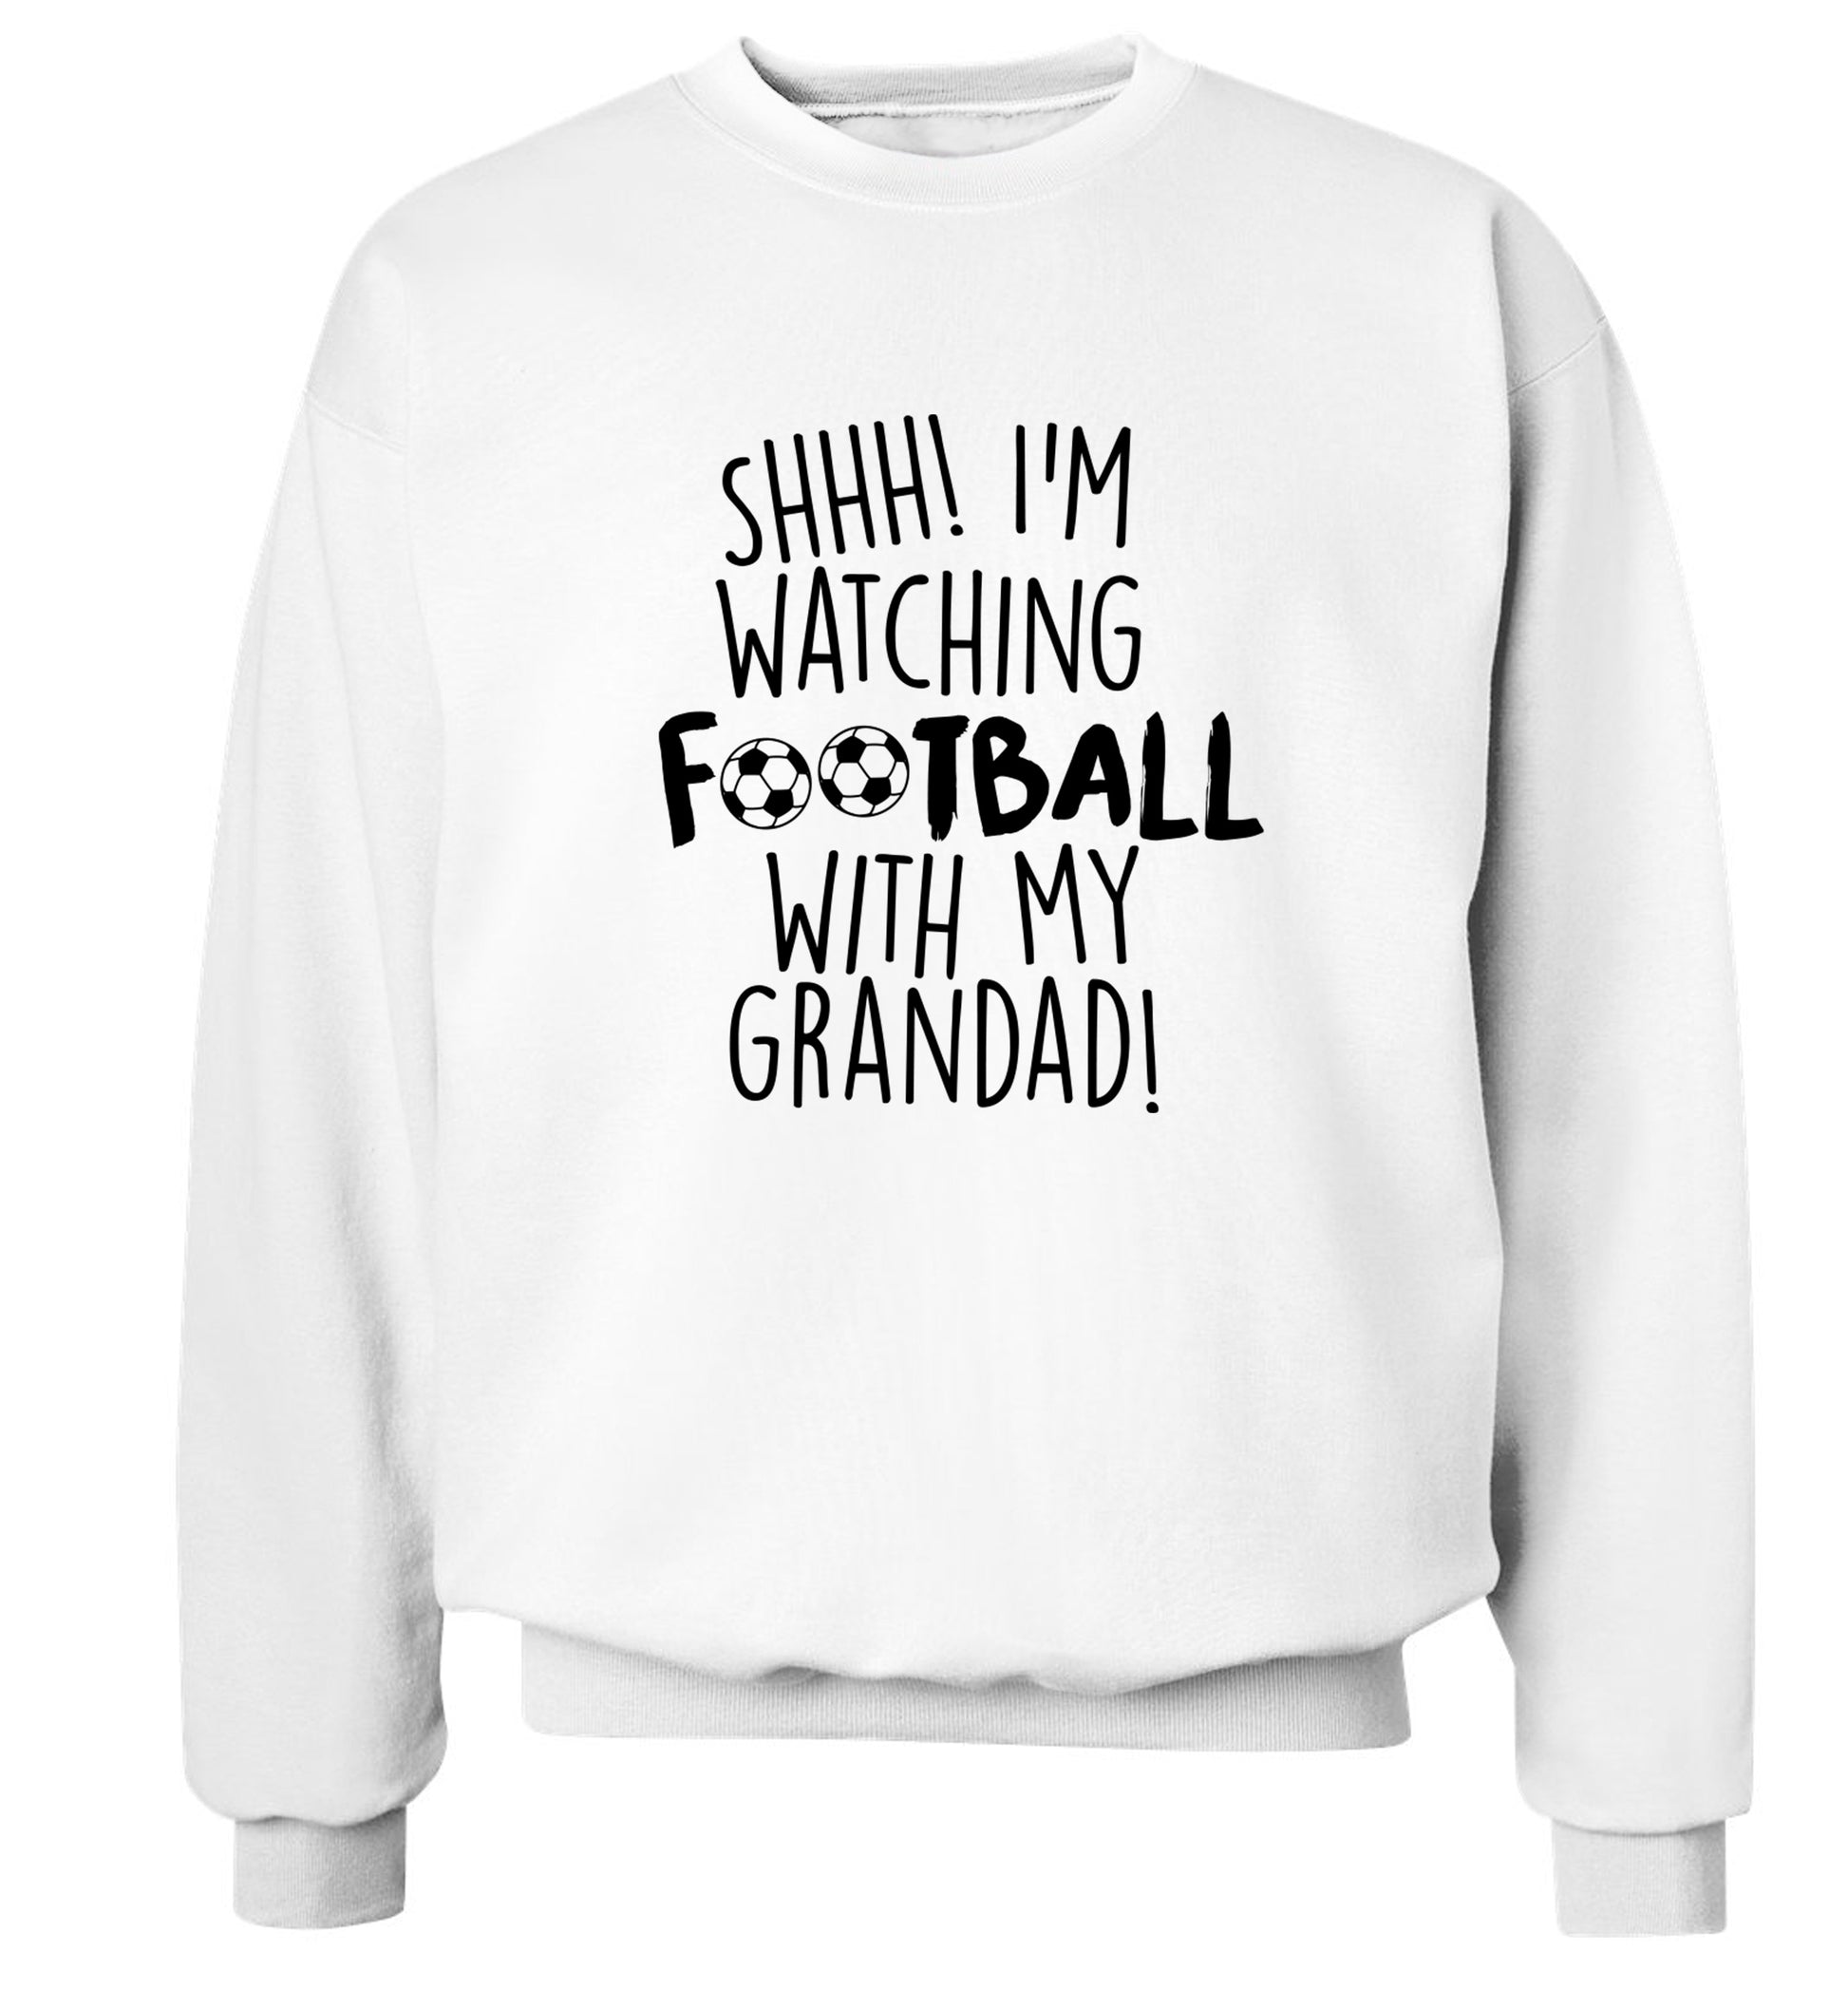 Shhh I'm watching football with my grandad Adult's unisexwhite Sweater 2XL